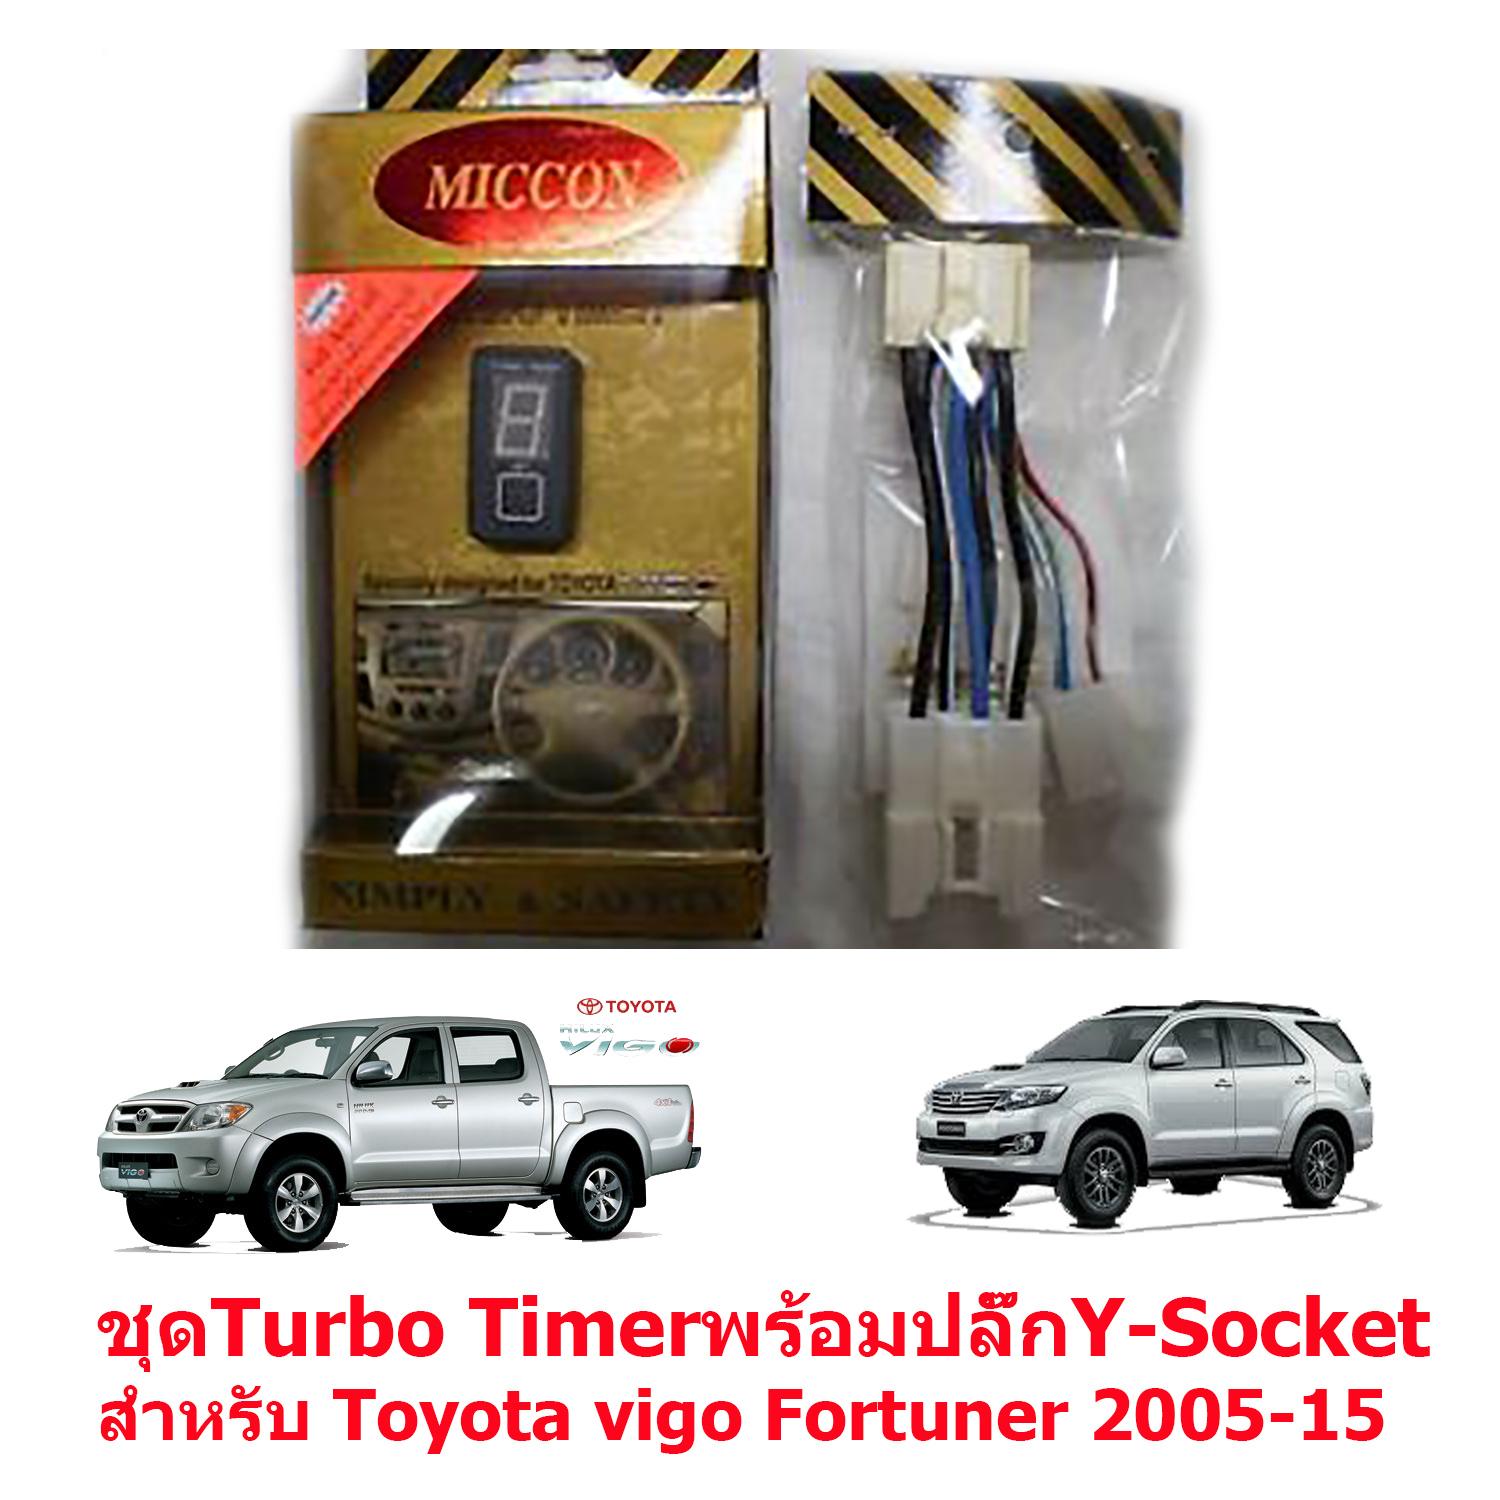 Miccon Turbo Timer Auto สำหรับToyota Hilux Vigo Fortuner 2005-15พร้อมY-Socket(TRD-549+TRD-619)